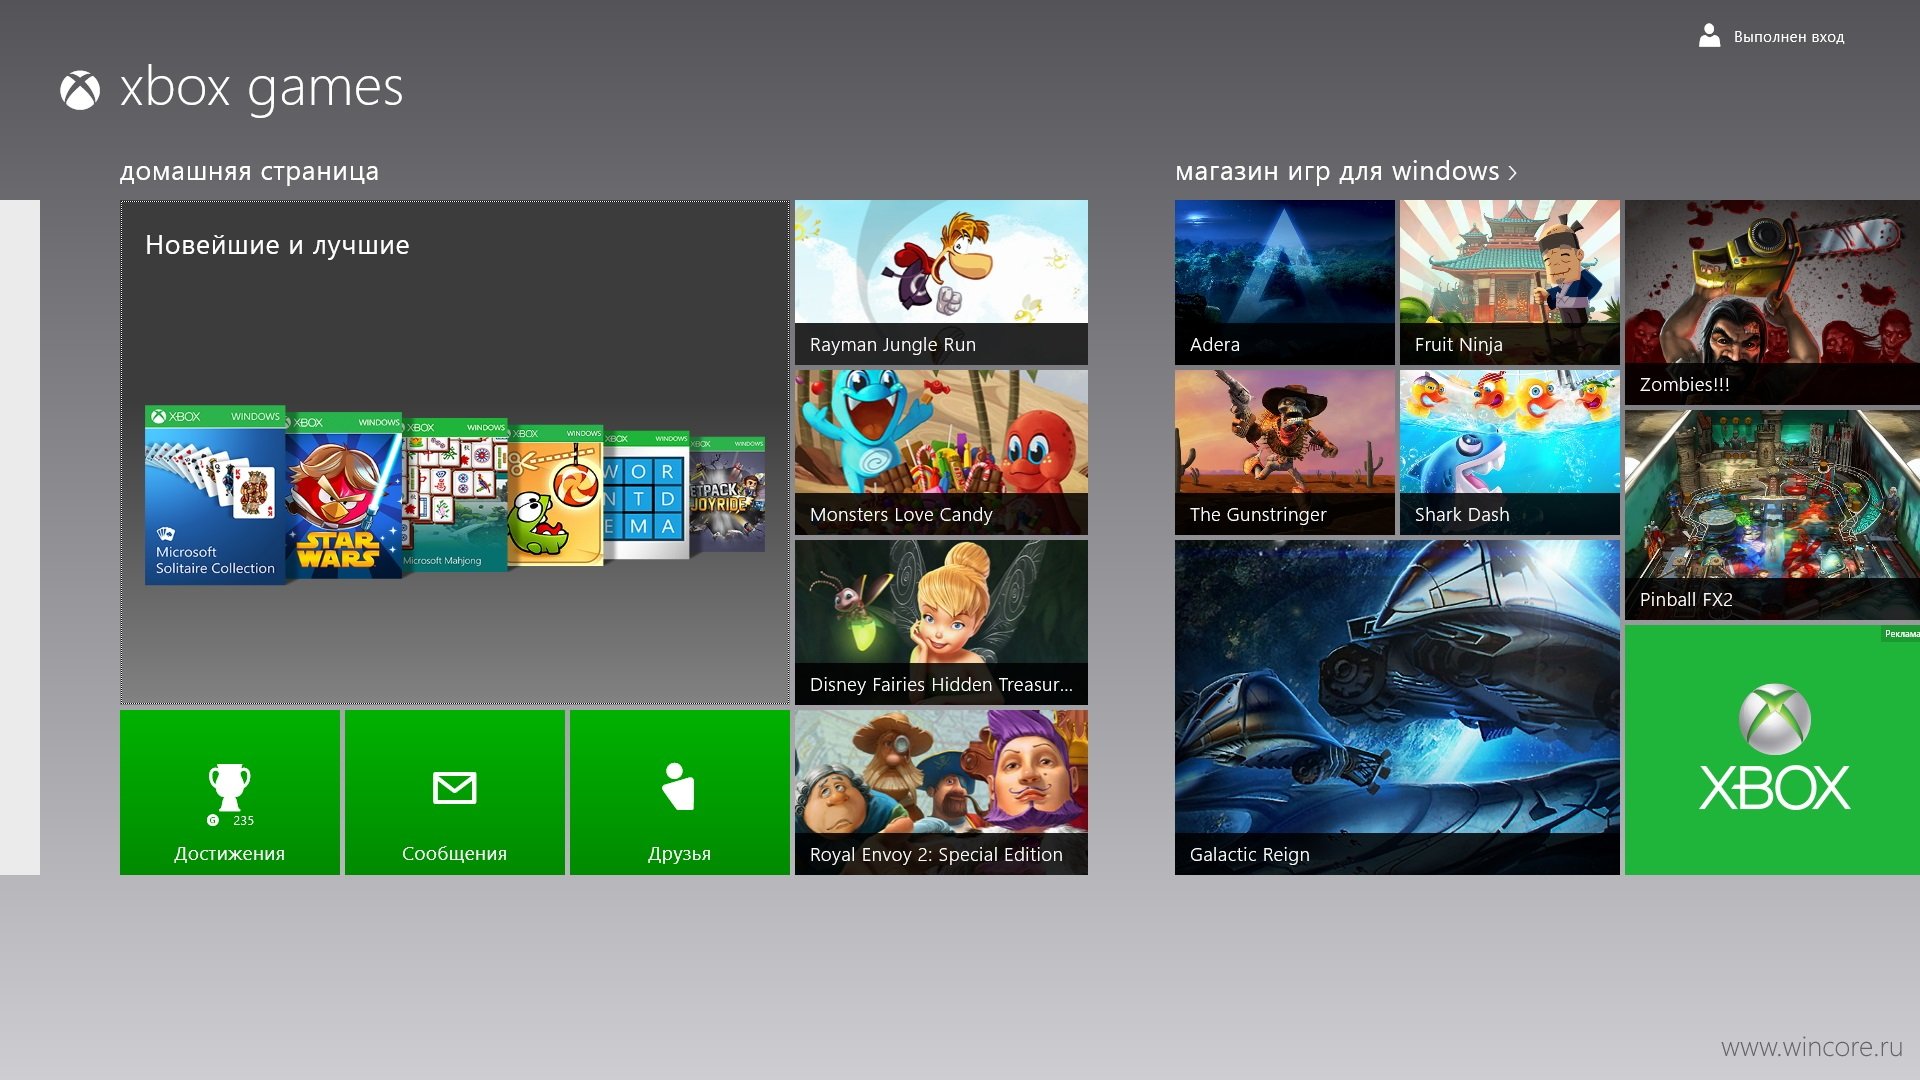 Xbox Windows Phone 8 Games